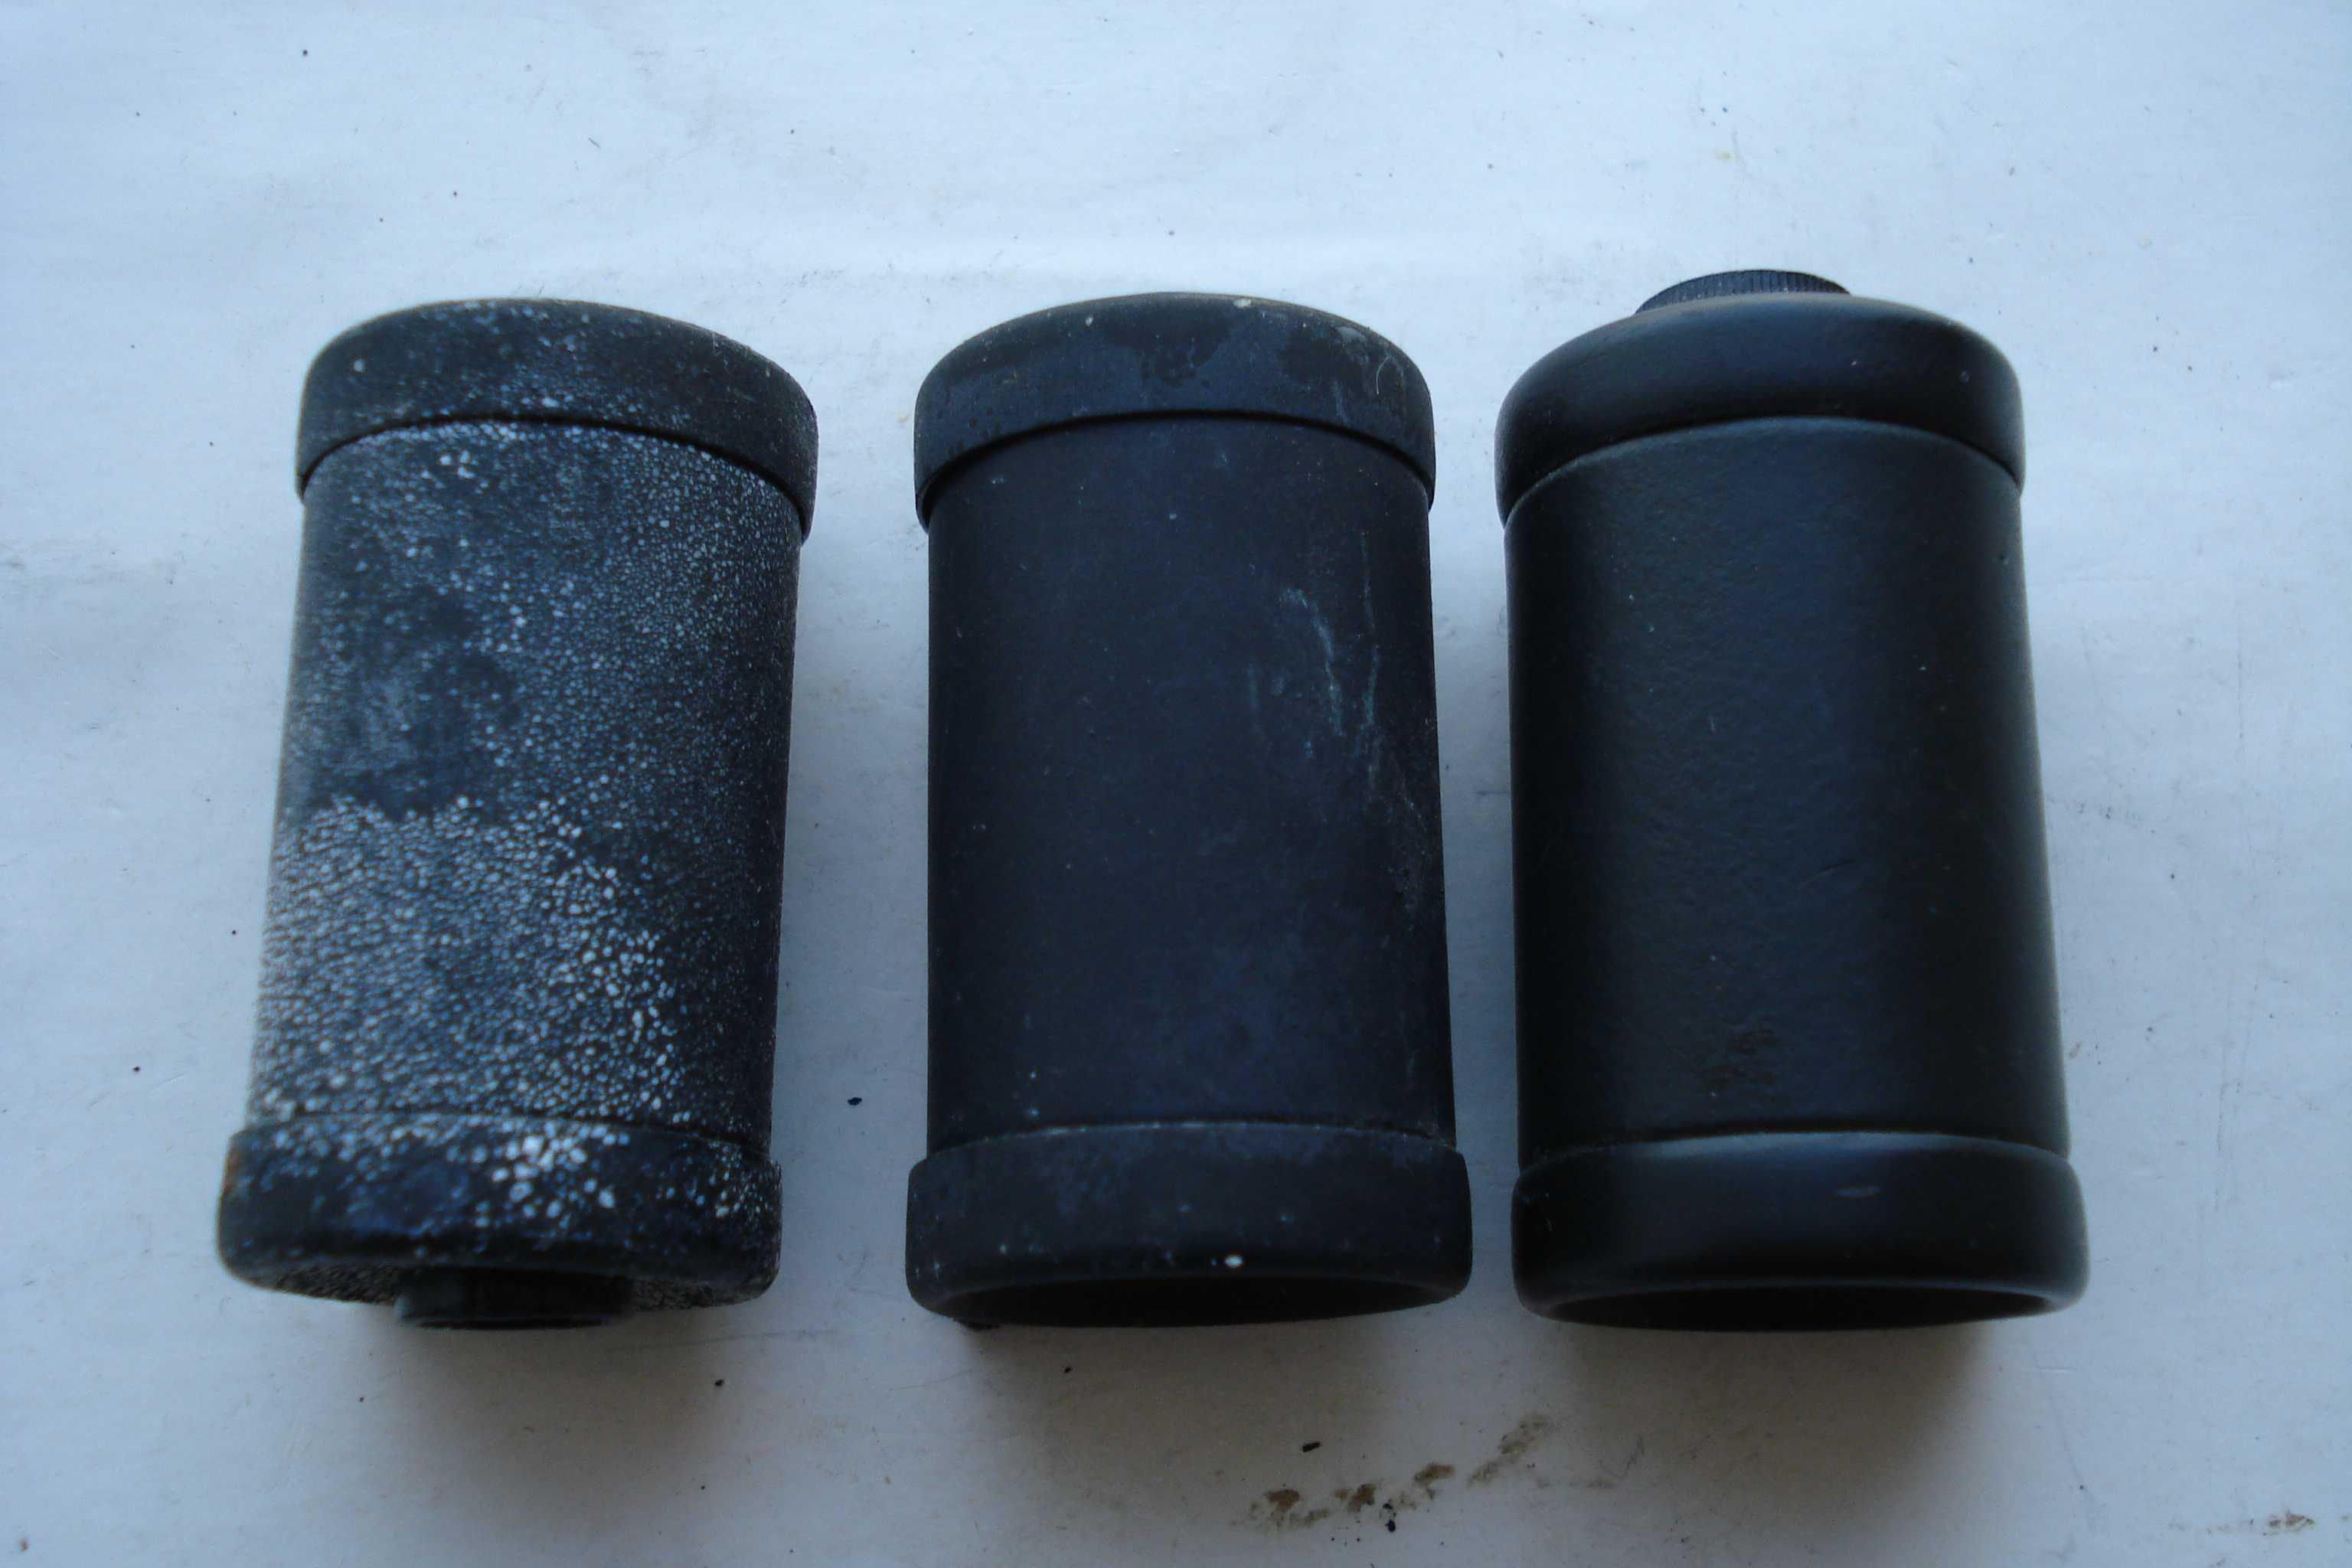 Ремни для фотоаппарата разные, кассеты, плёнка APS, кольца М42, М39